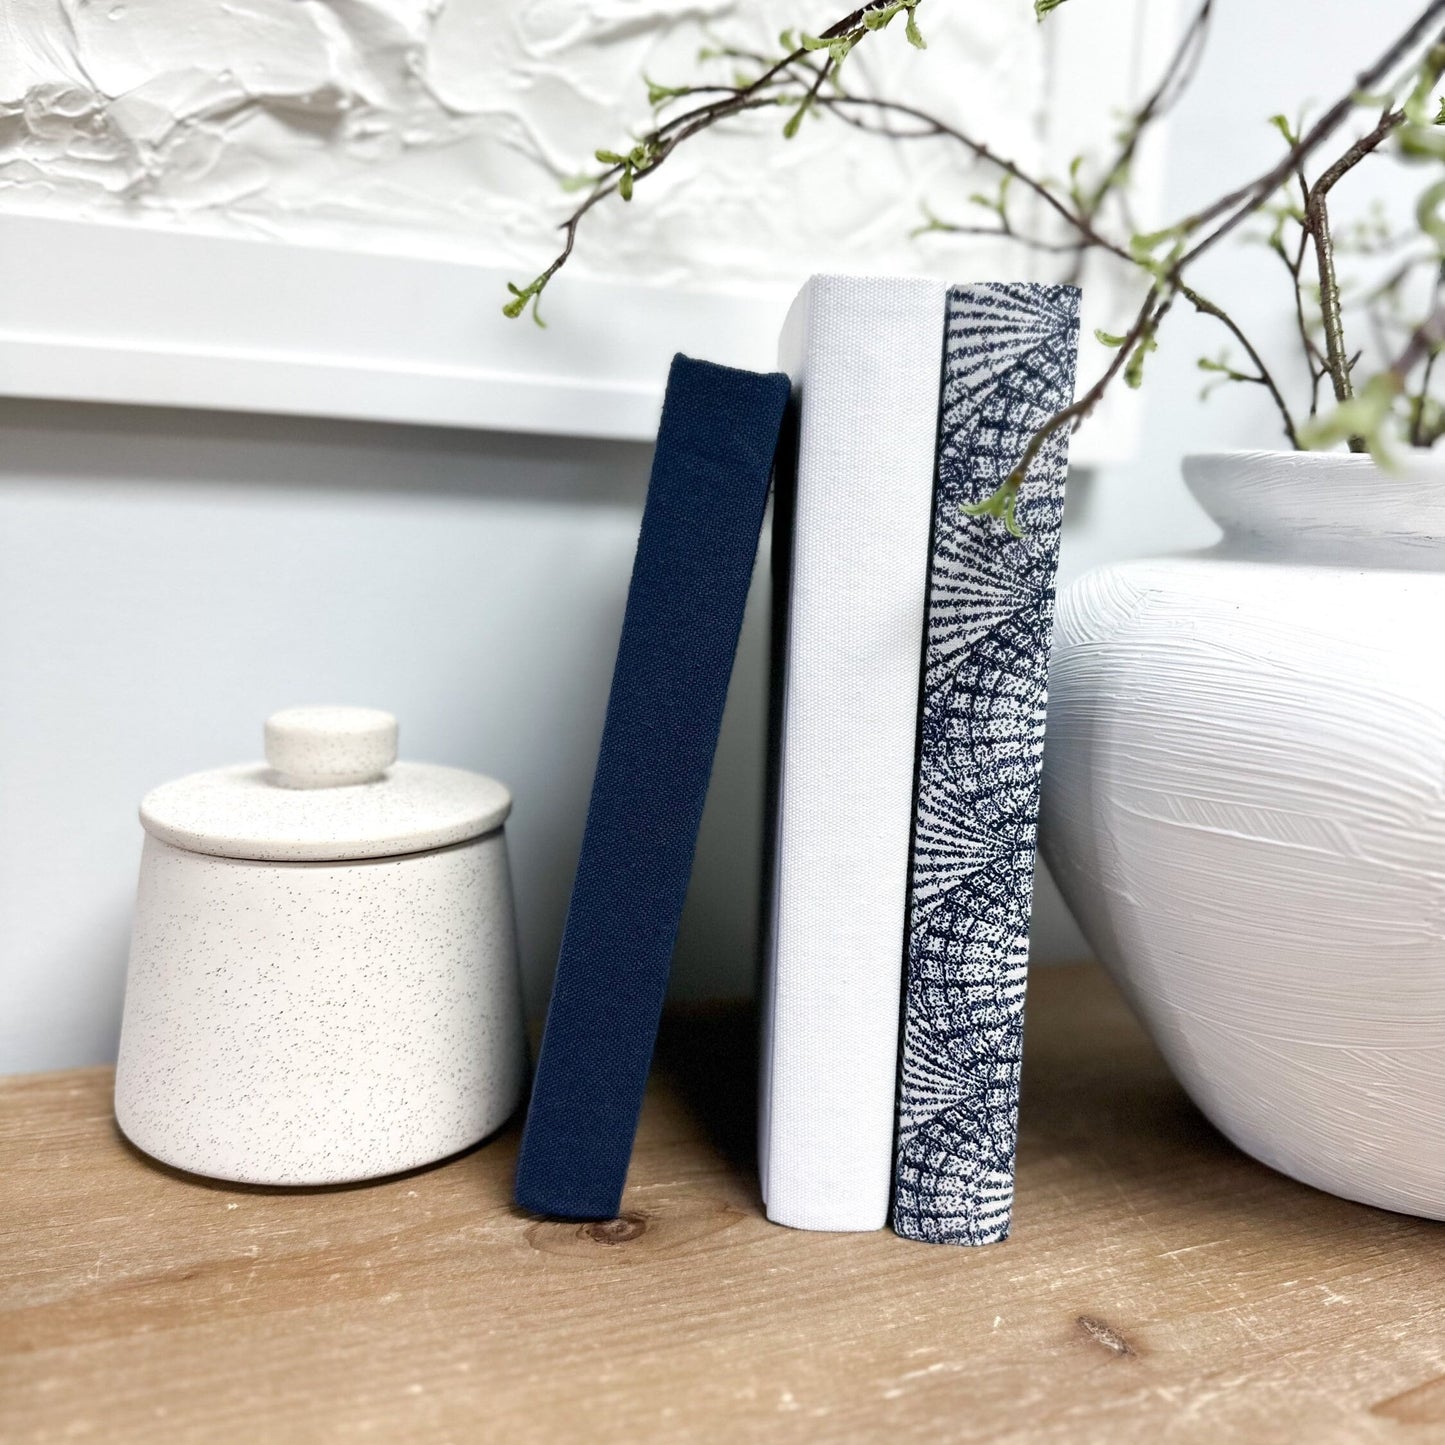 Blue and White Book Bundle, Decorative Books